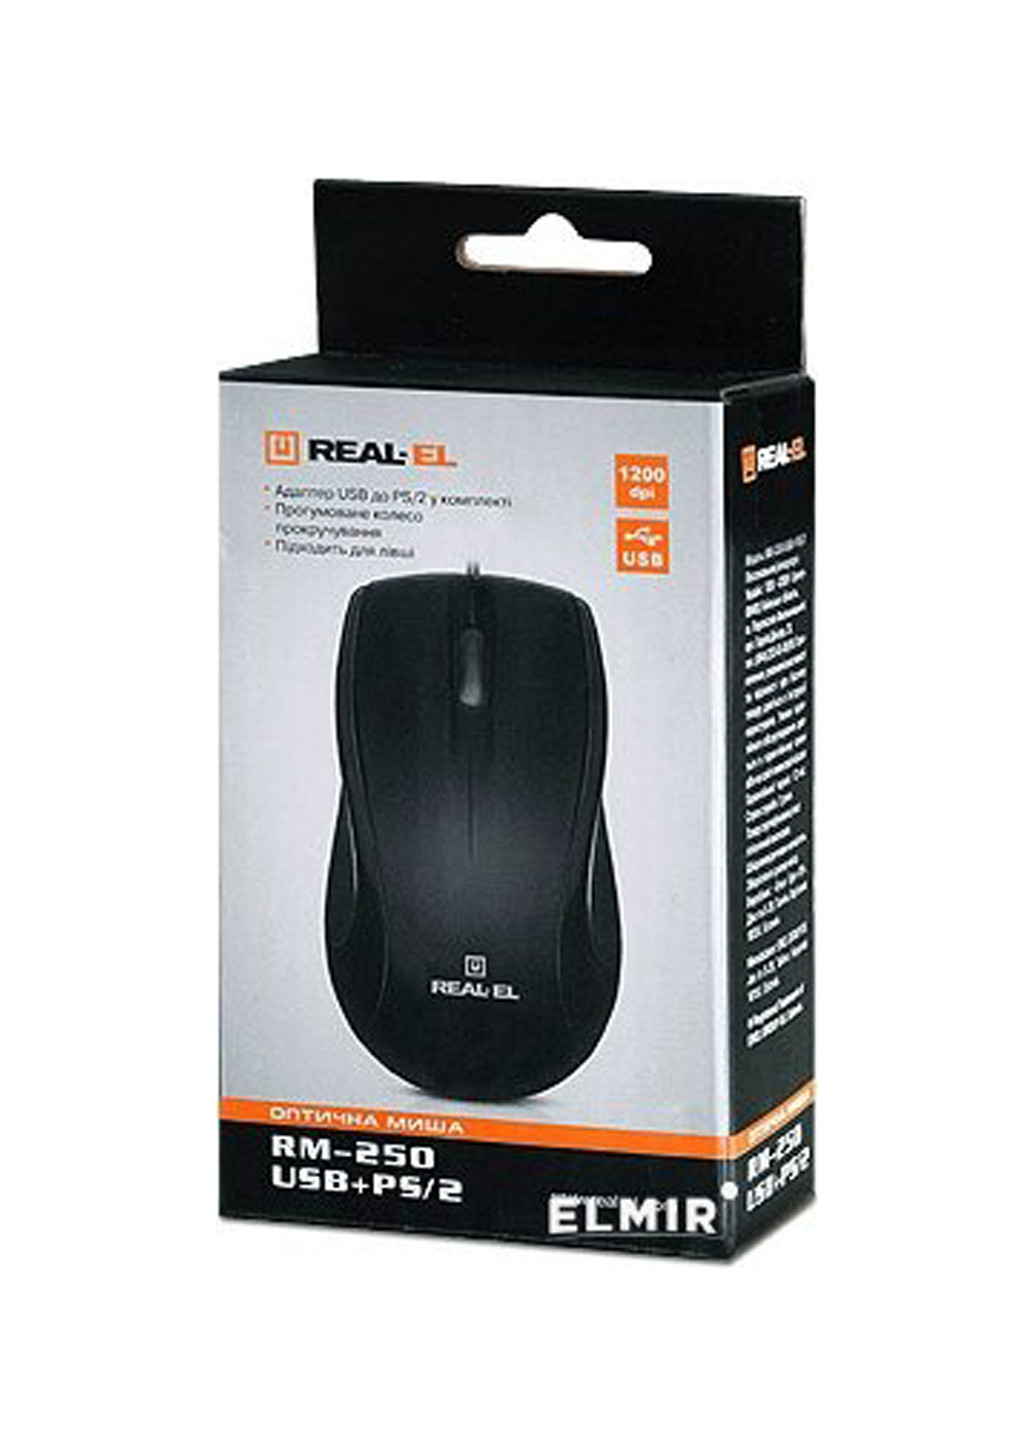 Мышь USB+PS/2 Real-El rm-250 black (134154286)